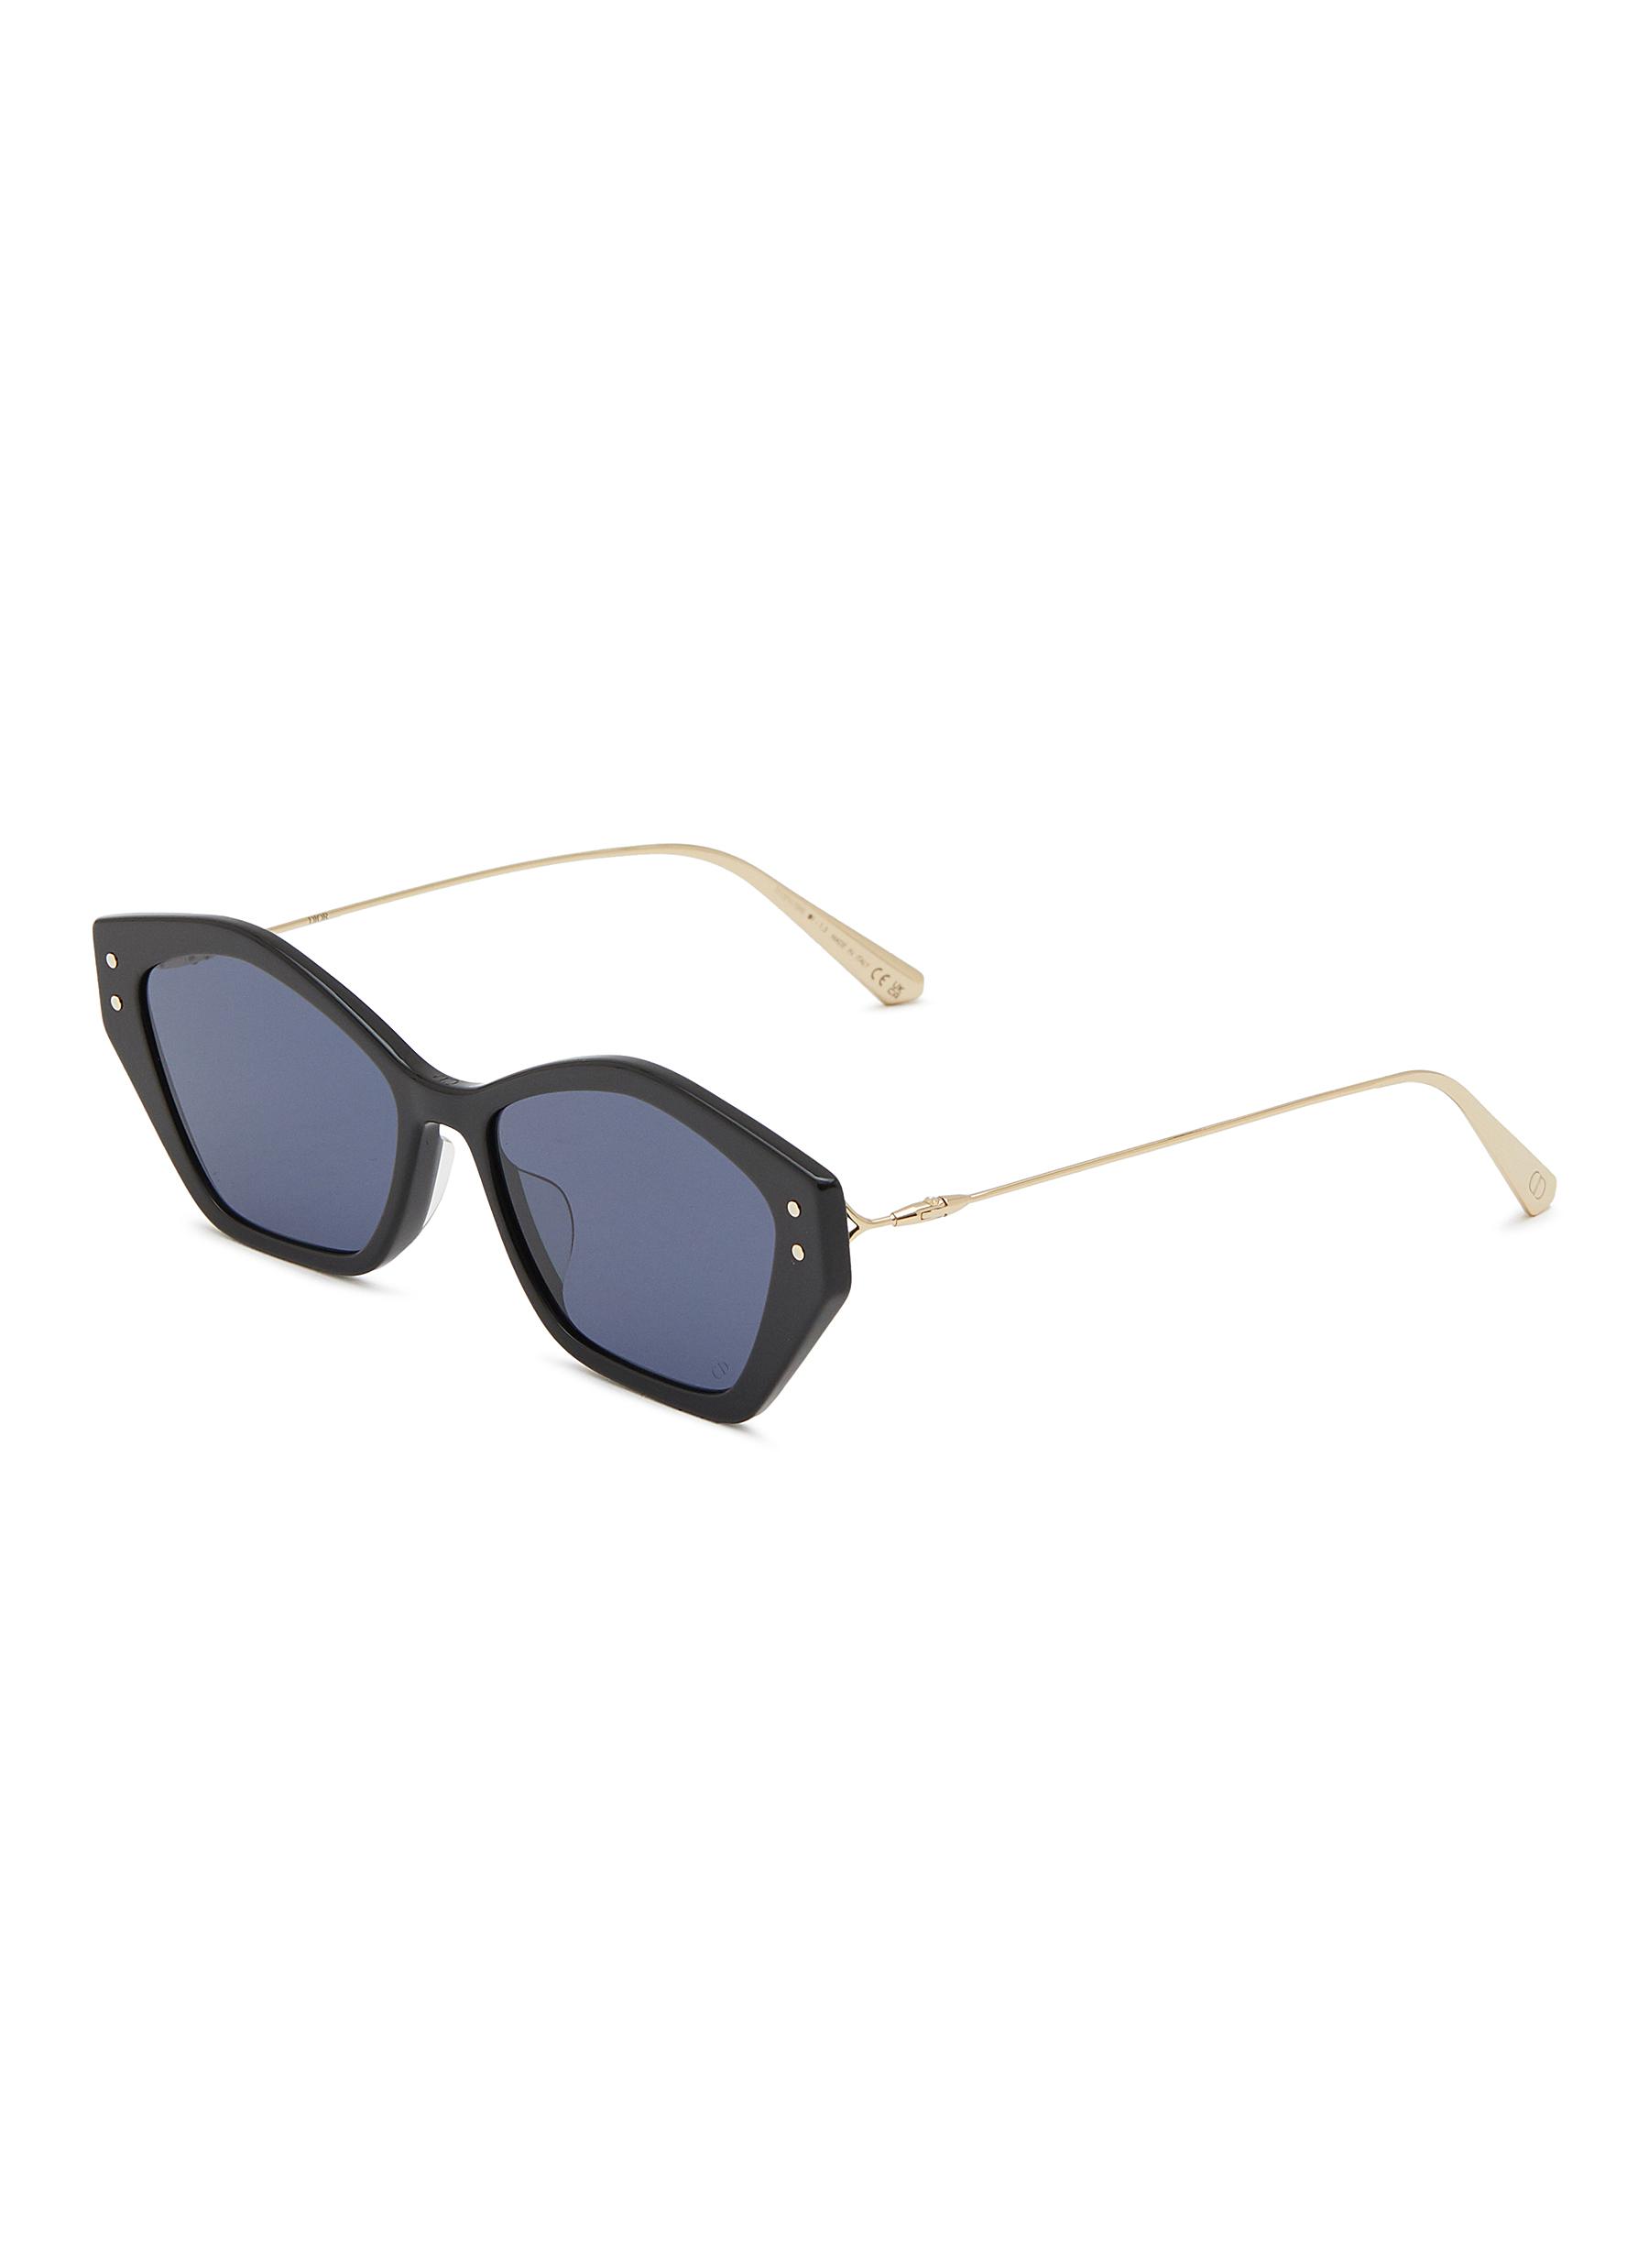 Christian Dior Addict 1 RHL0T Sunglasses Sunglasses  Designer Exchange   Buy Sell Exchange